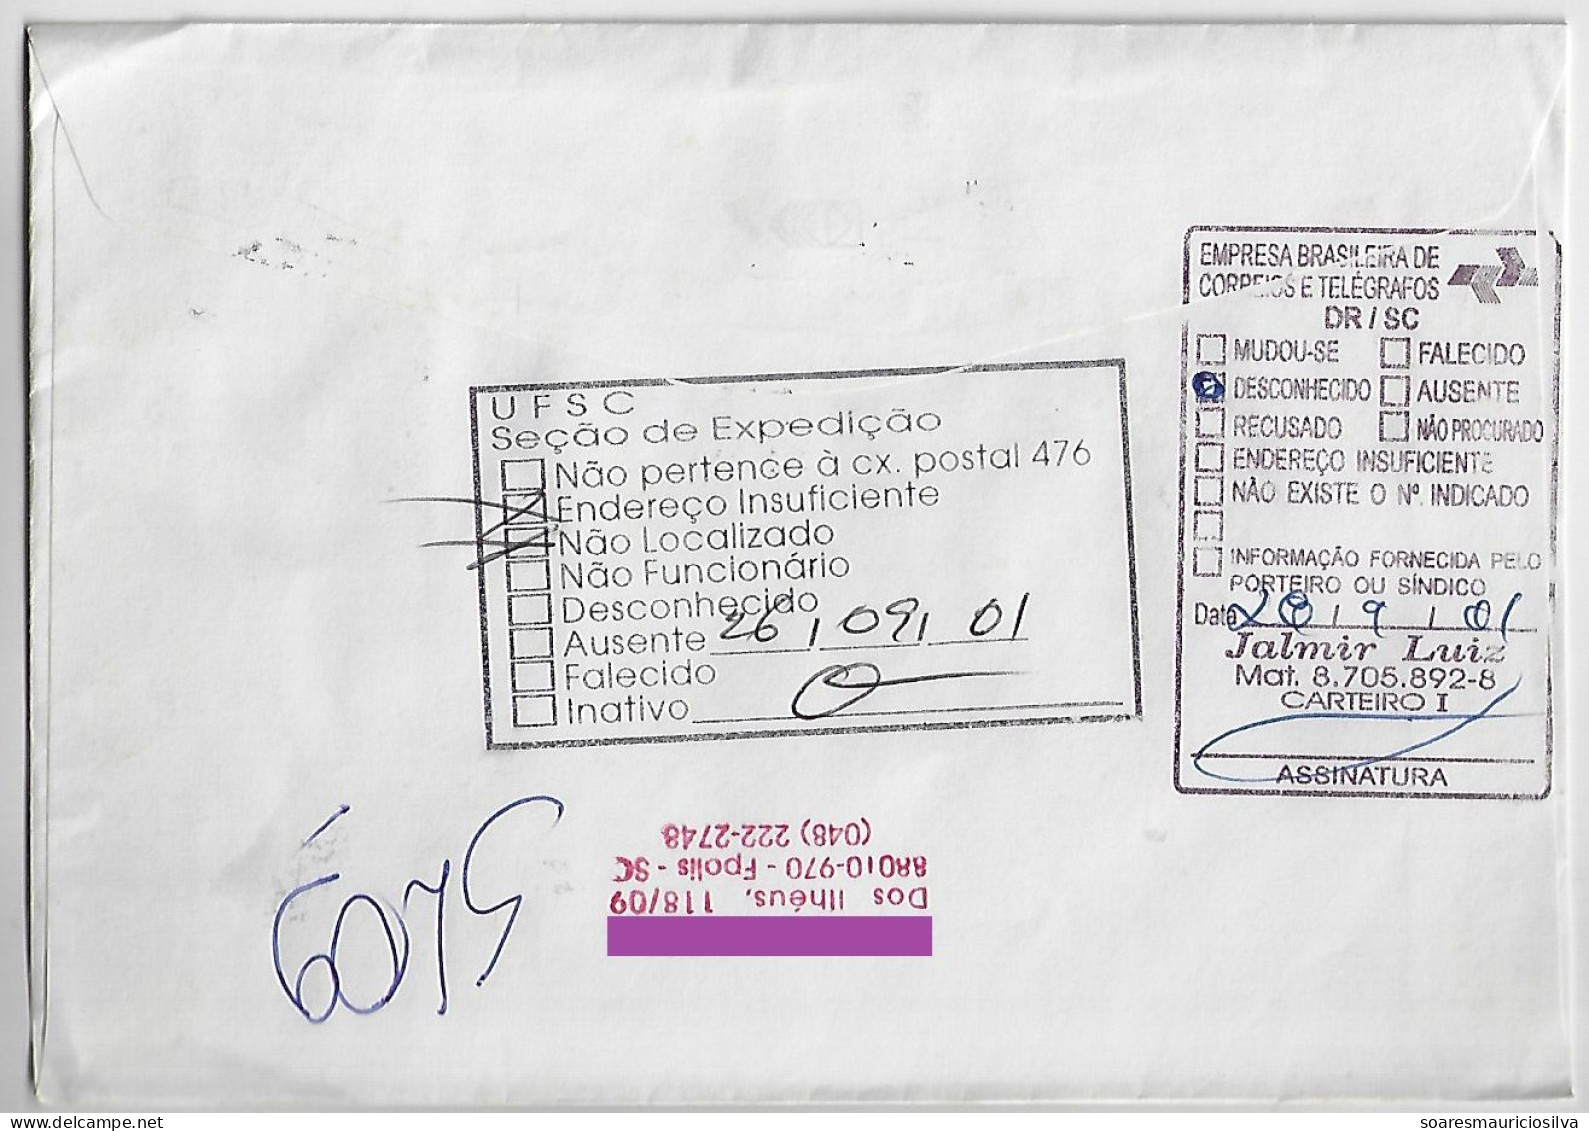 Brazil 2001 Returned To Sender Cover Florianópolis Ilhéus Agency Stamp Extreme Sport Skate Cancel DH = After The Hour - Briefe U. Dokumente